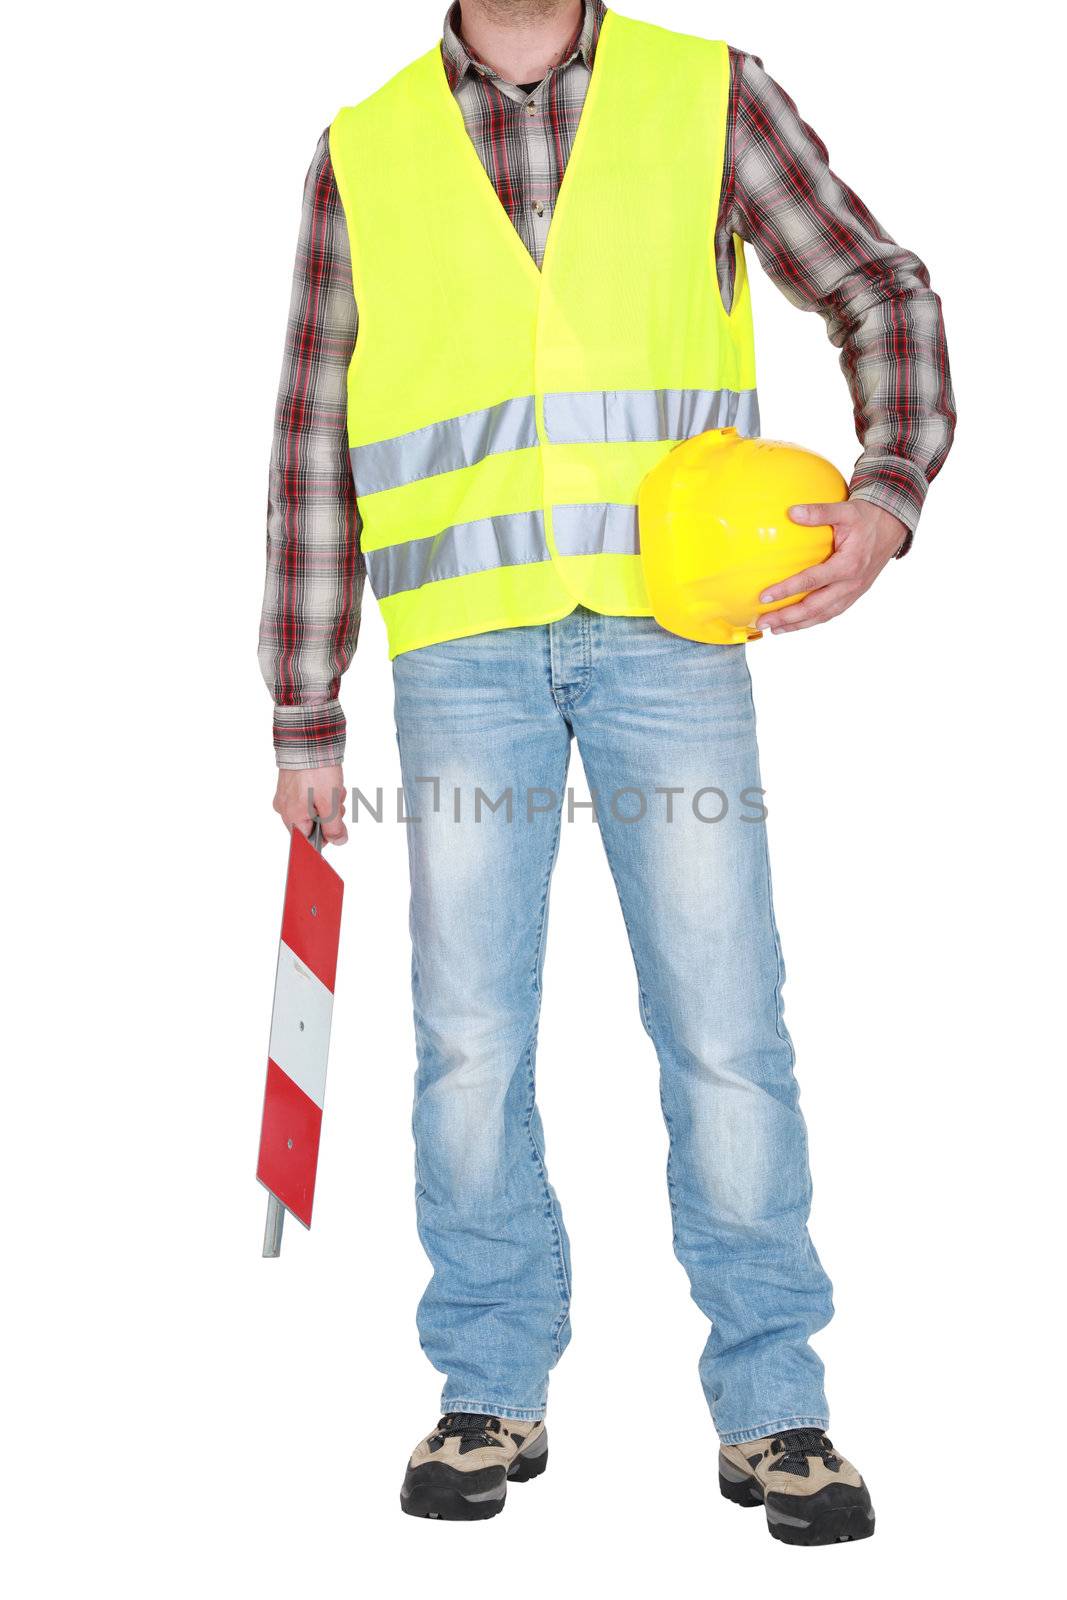 builder standing hard hat in hand wearing safety jacket